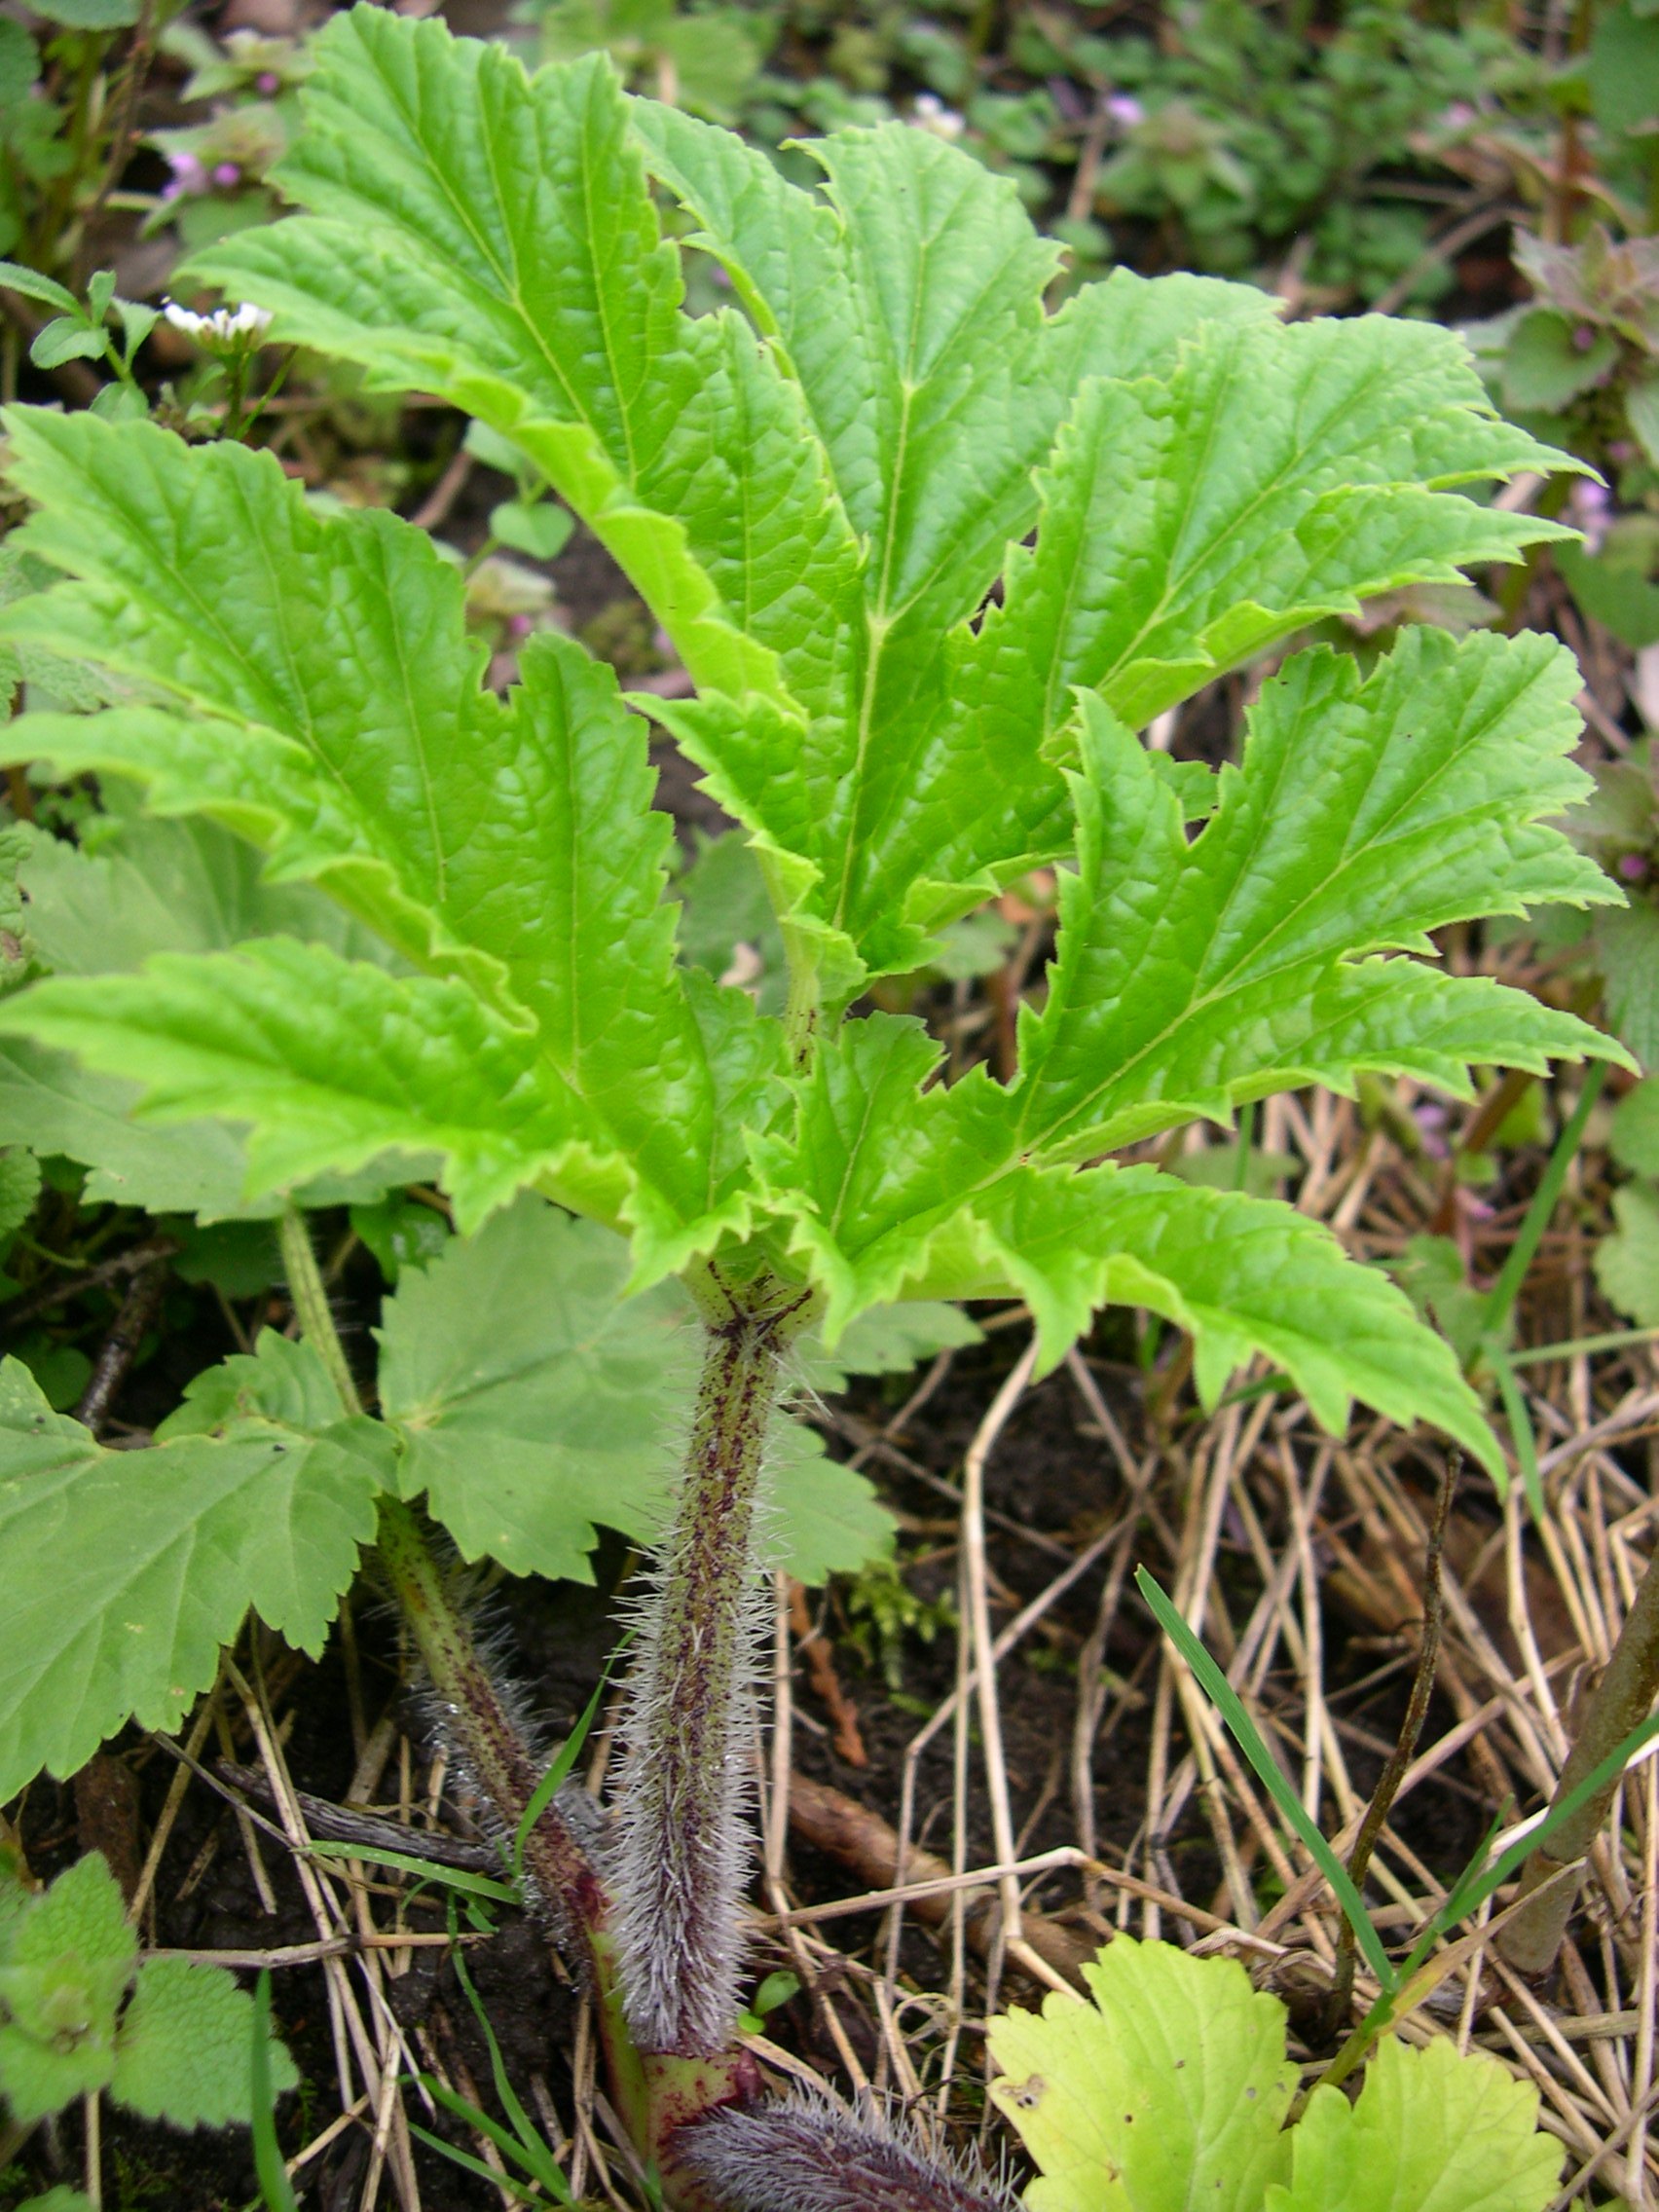 Giant hogweed identification and control: Heracleum mantegazzianum